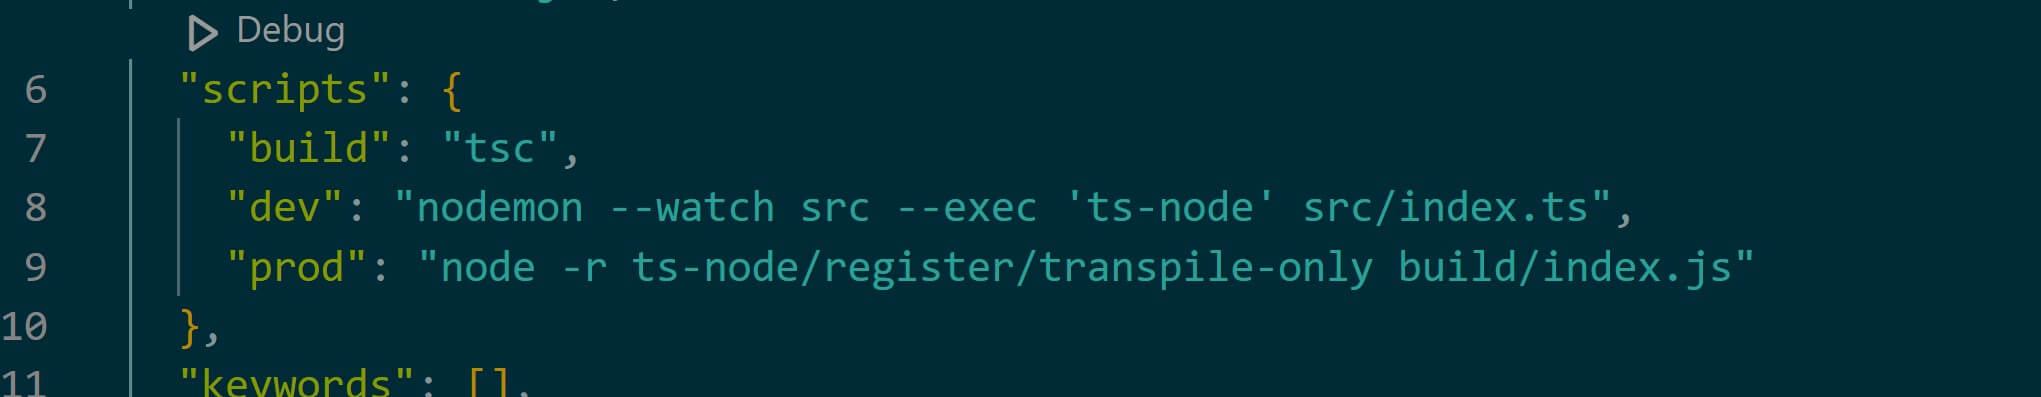 Dockerize Node.js TypeScript with Docker, MySQL and Compose